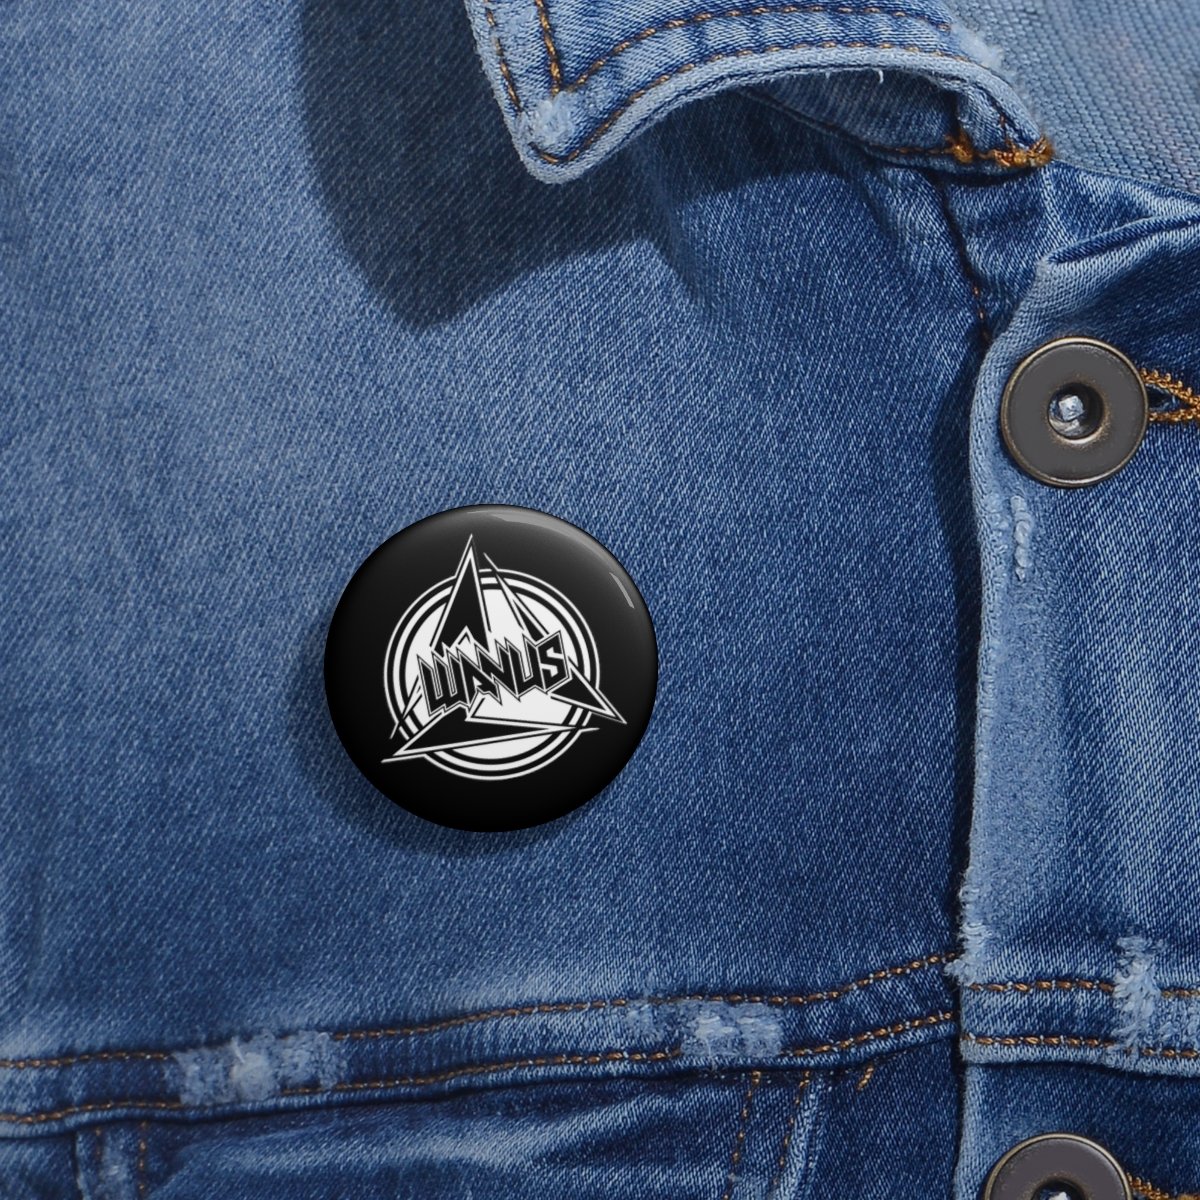 Wanus – Black Logo Pin Buttons